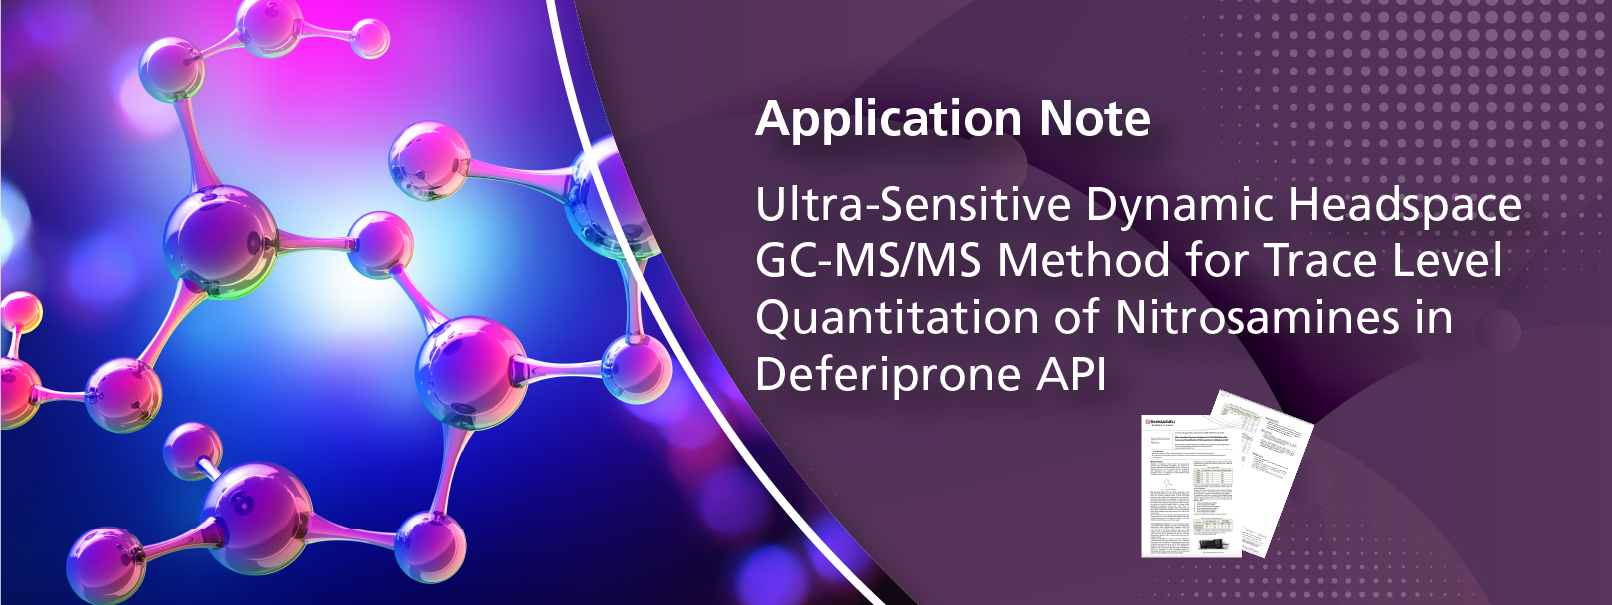 Ultra-Sensitive Dynamic Headspace GC-MS/MS Method for Trace Level Quantitation of Nitrosamines in Deferiprone API